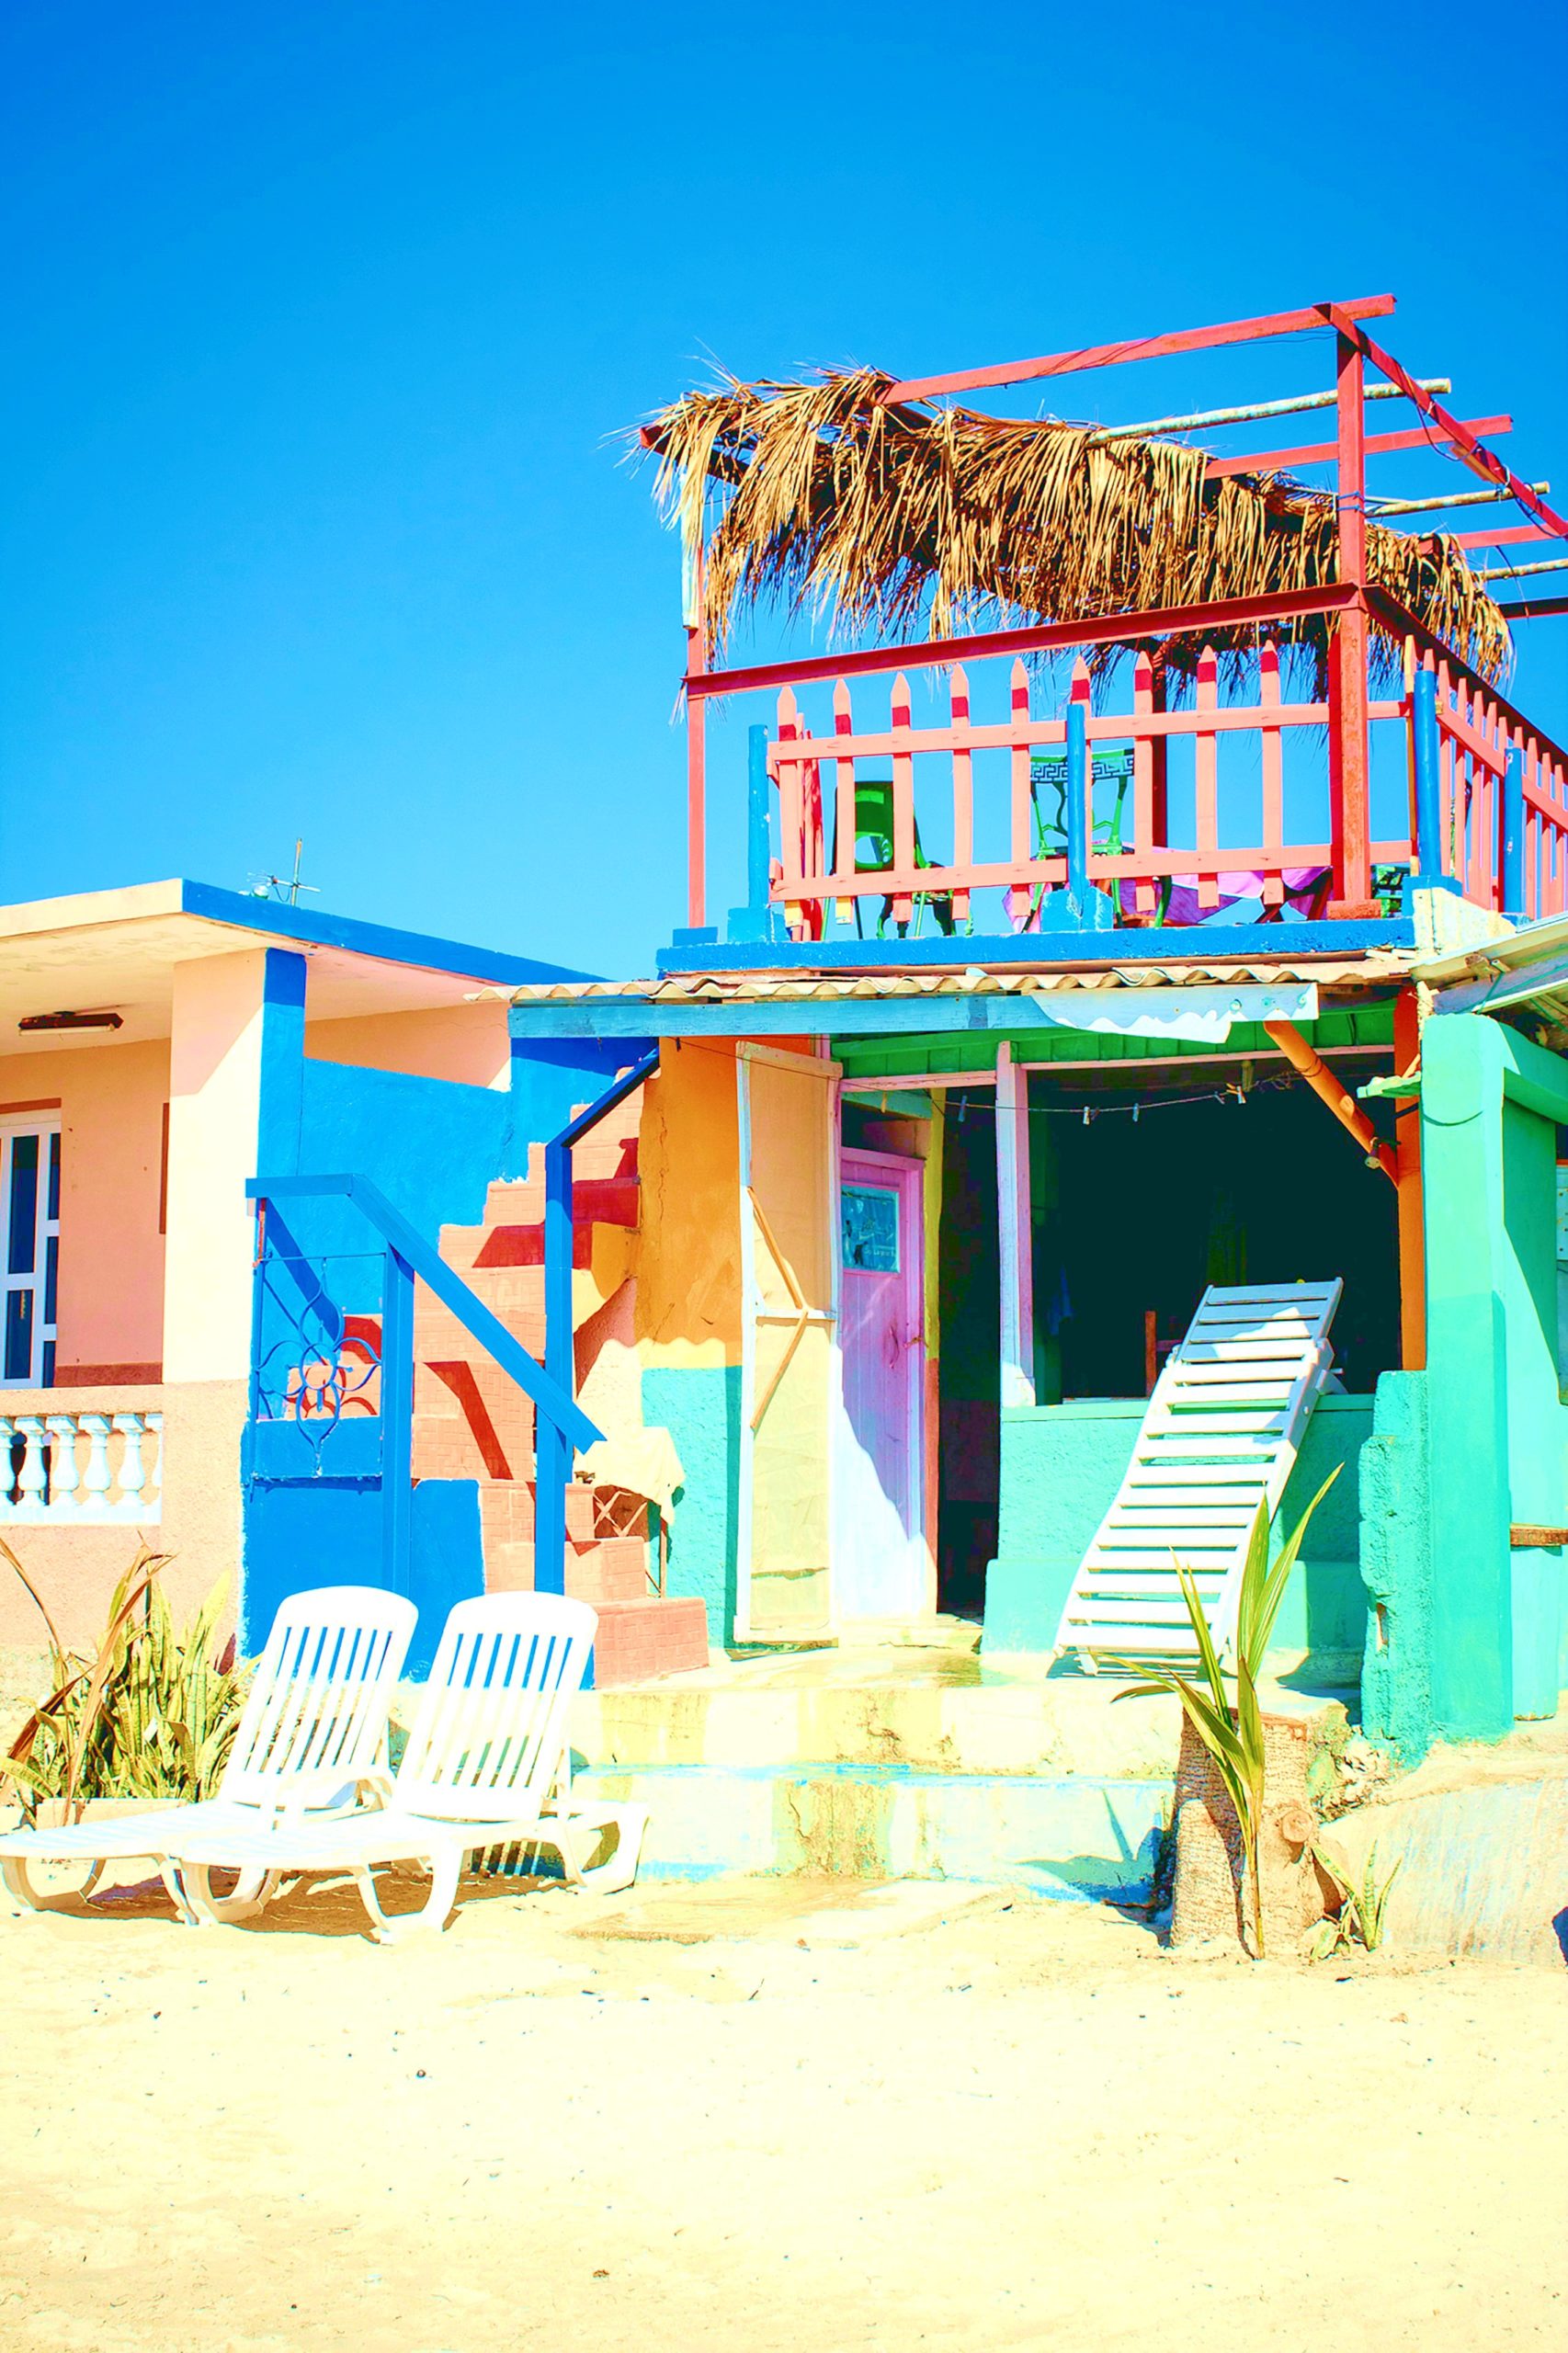 <img src="beach shack.jpg" alt="beach shack buying your first home"/> 